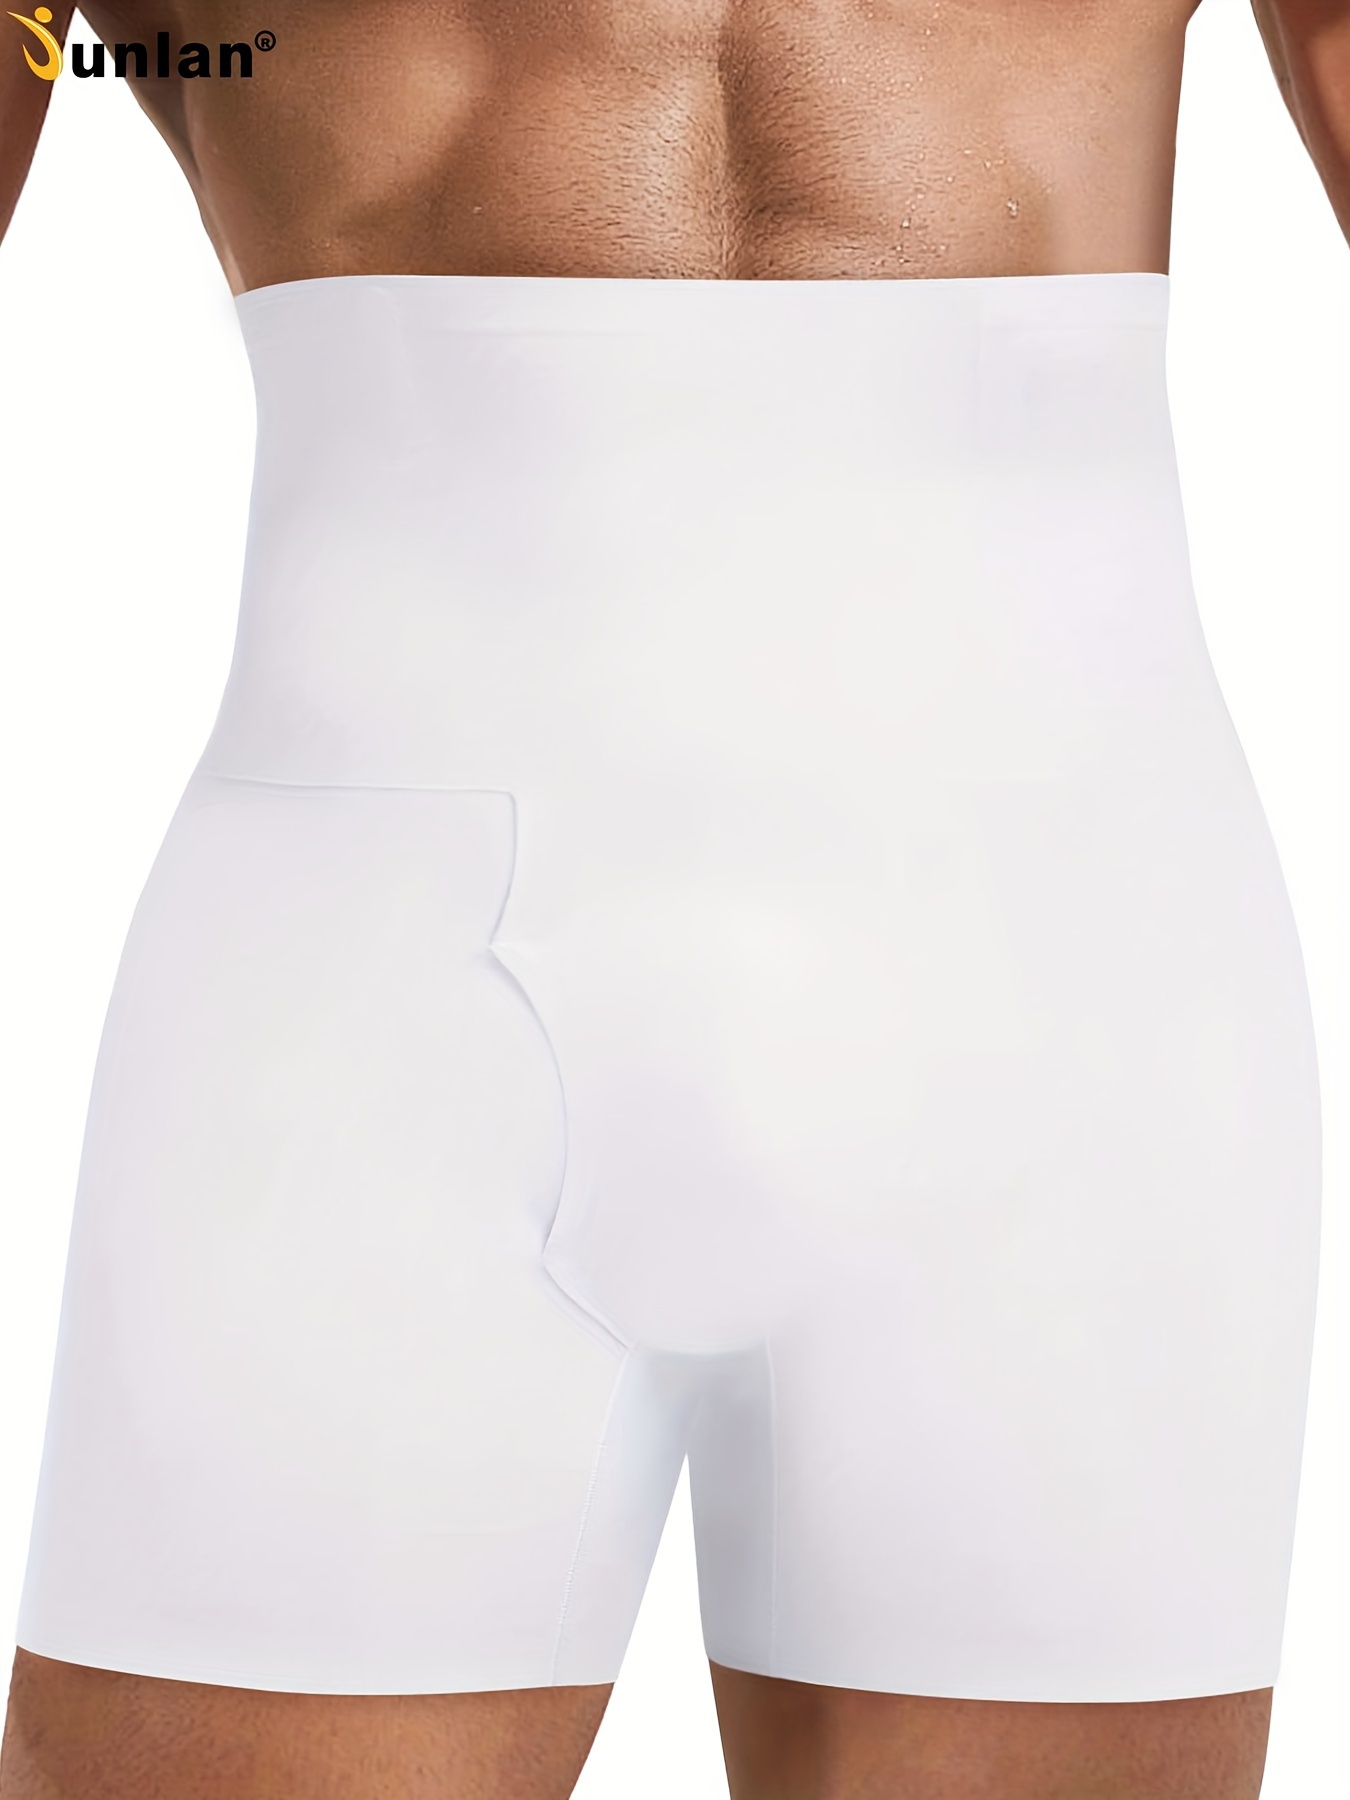 junlan men shapewear tummy control shorts slimming body shaper high waist compression boxers briefs